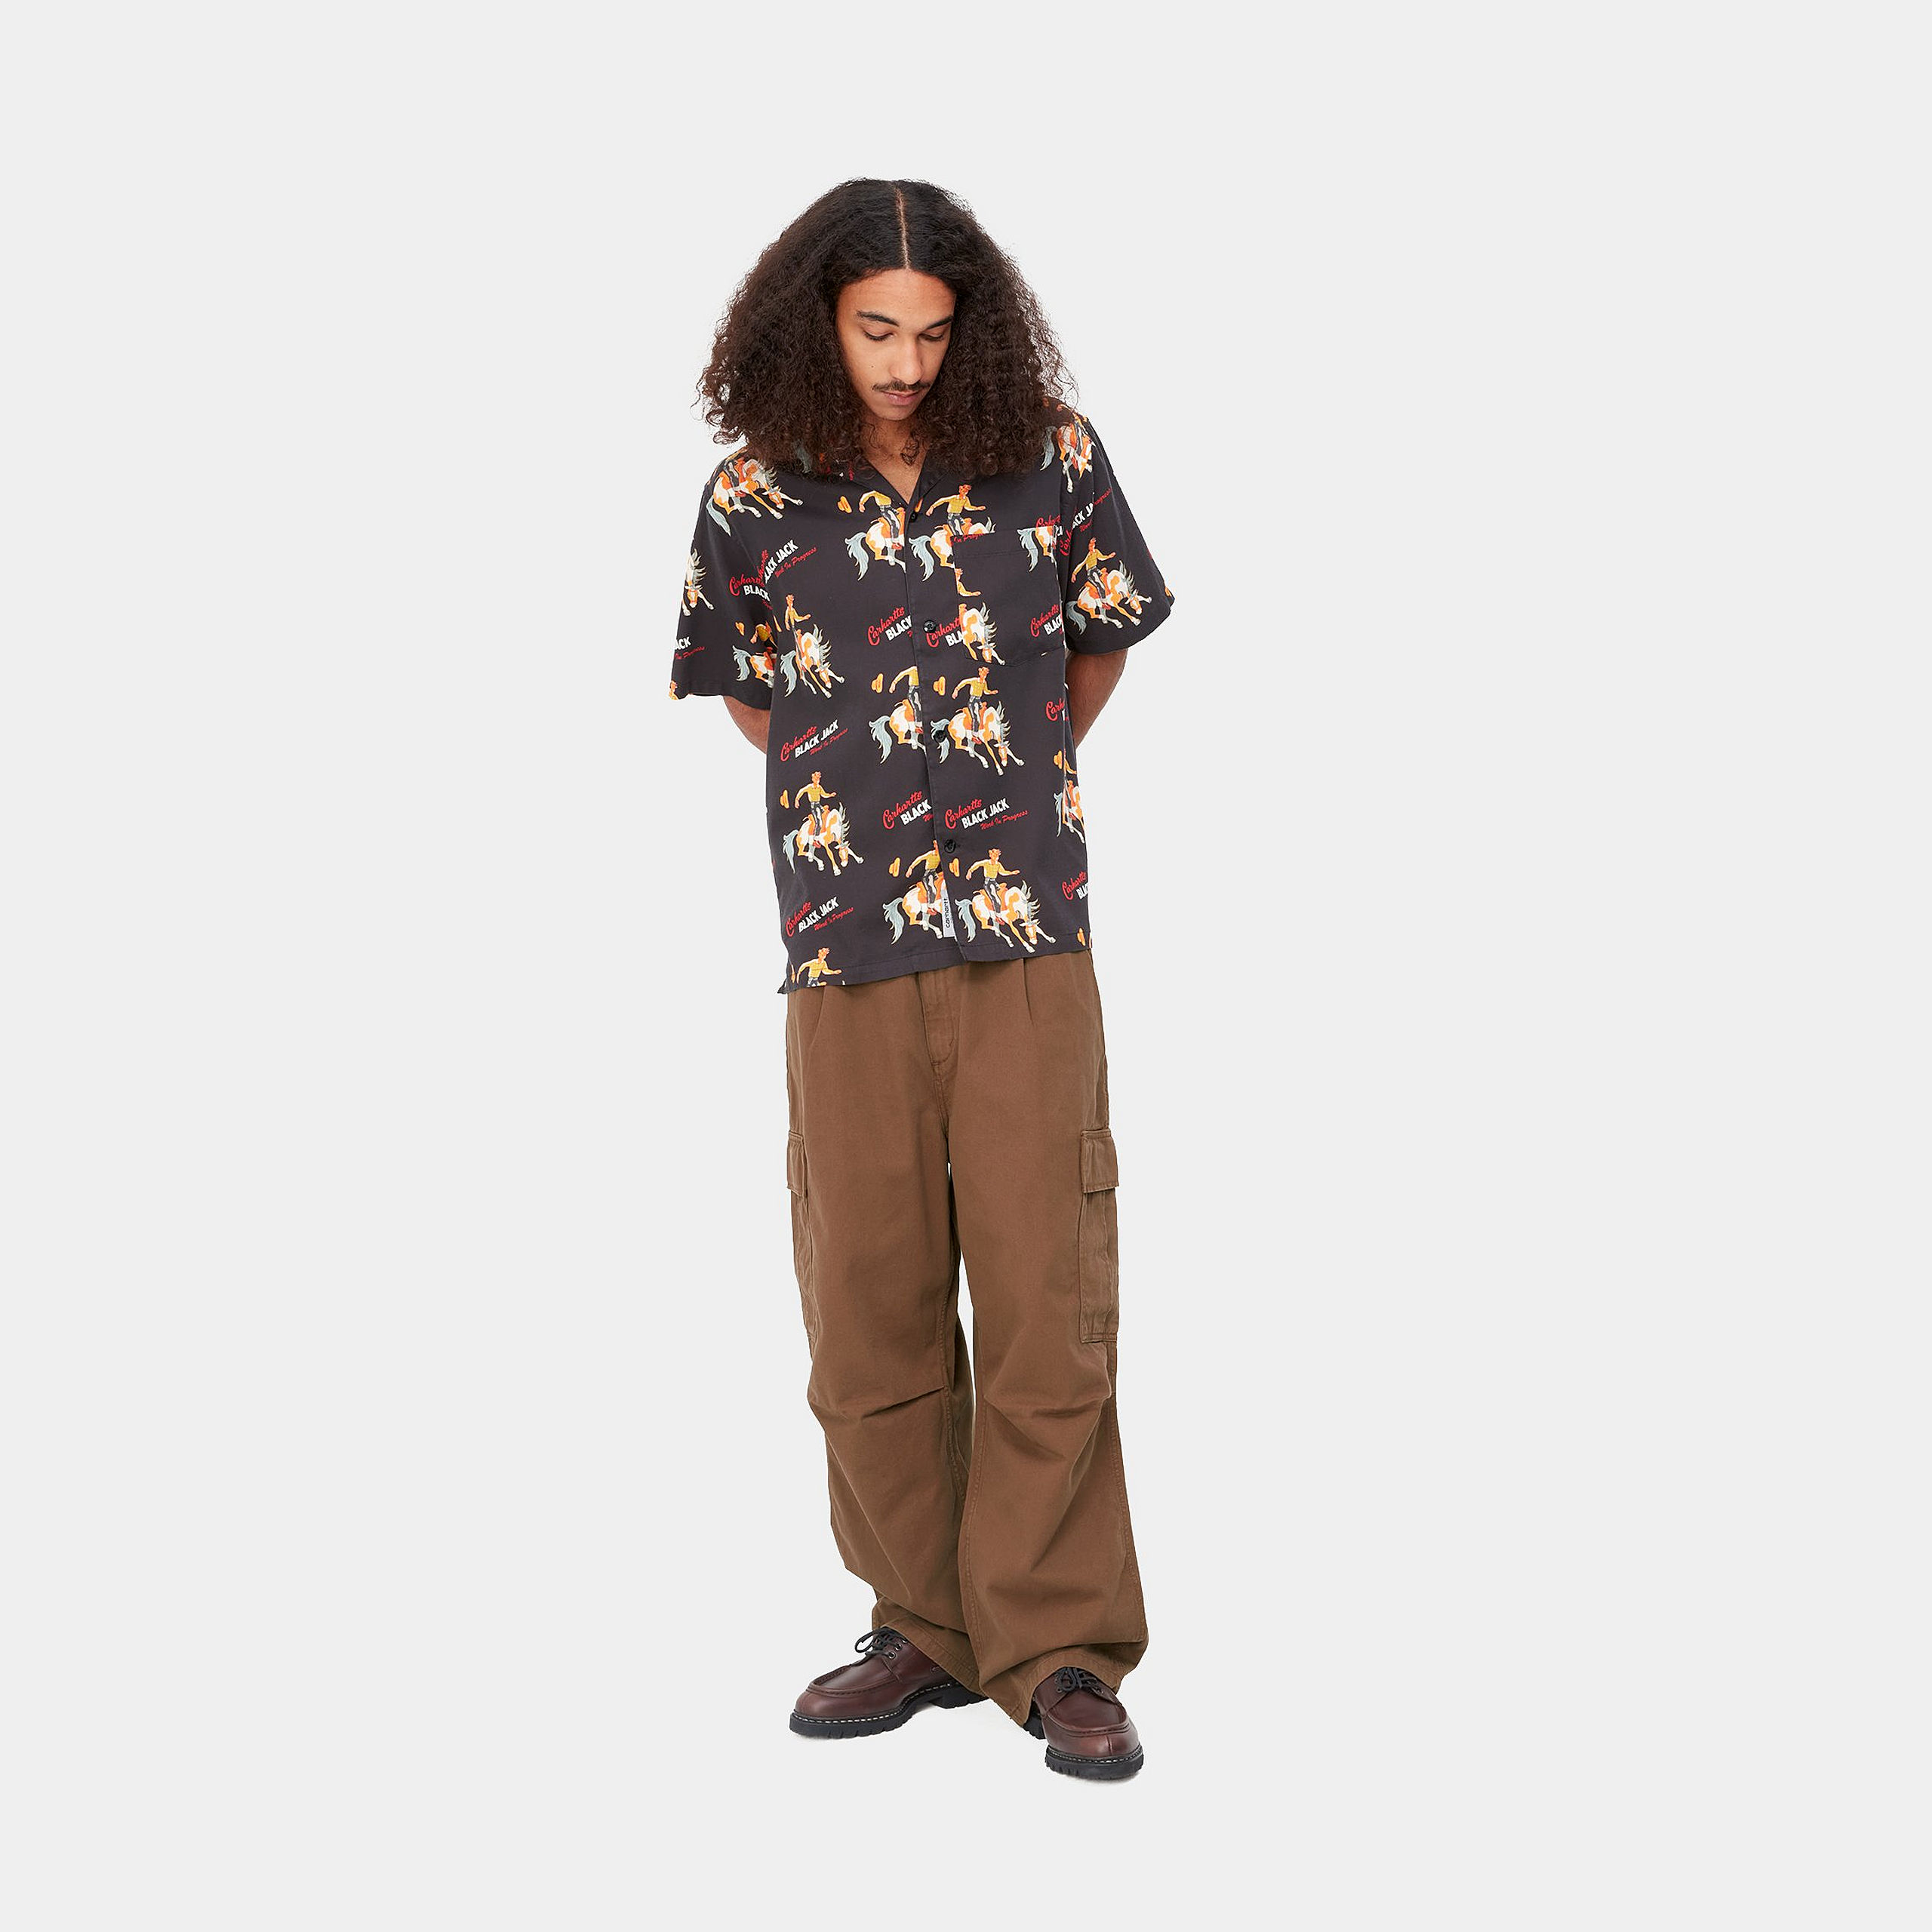 Carhartt Pants | Men’s Carhartt Pants | Color: Tan | Size: 34 | Pm-75957046's Closet